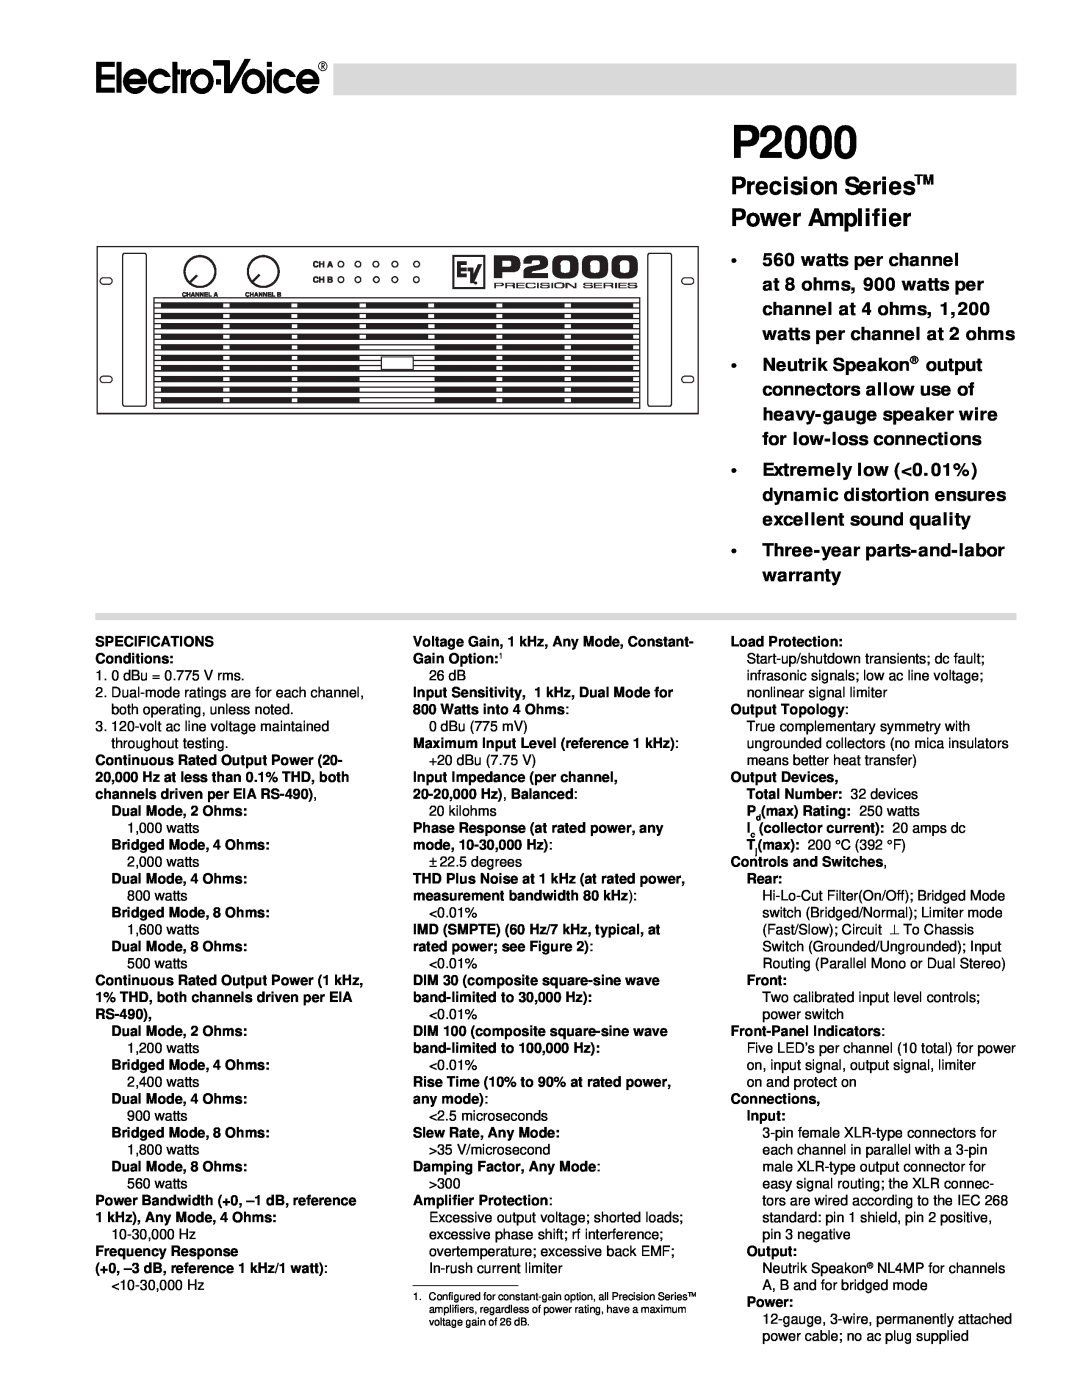 Electro-Voice P2000 warranty Precision SeriesTM, Power Amplifier 